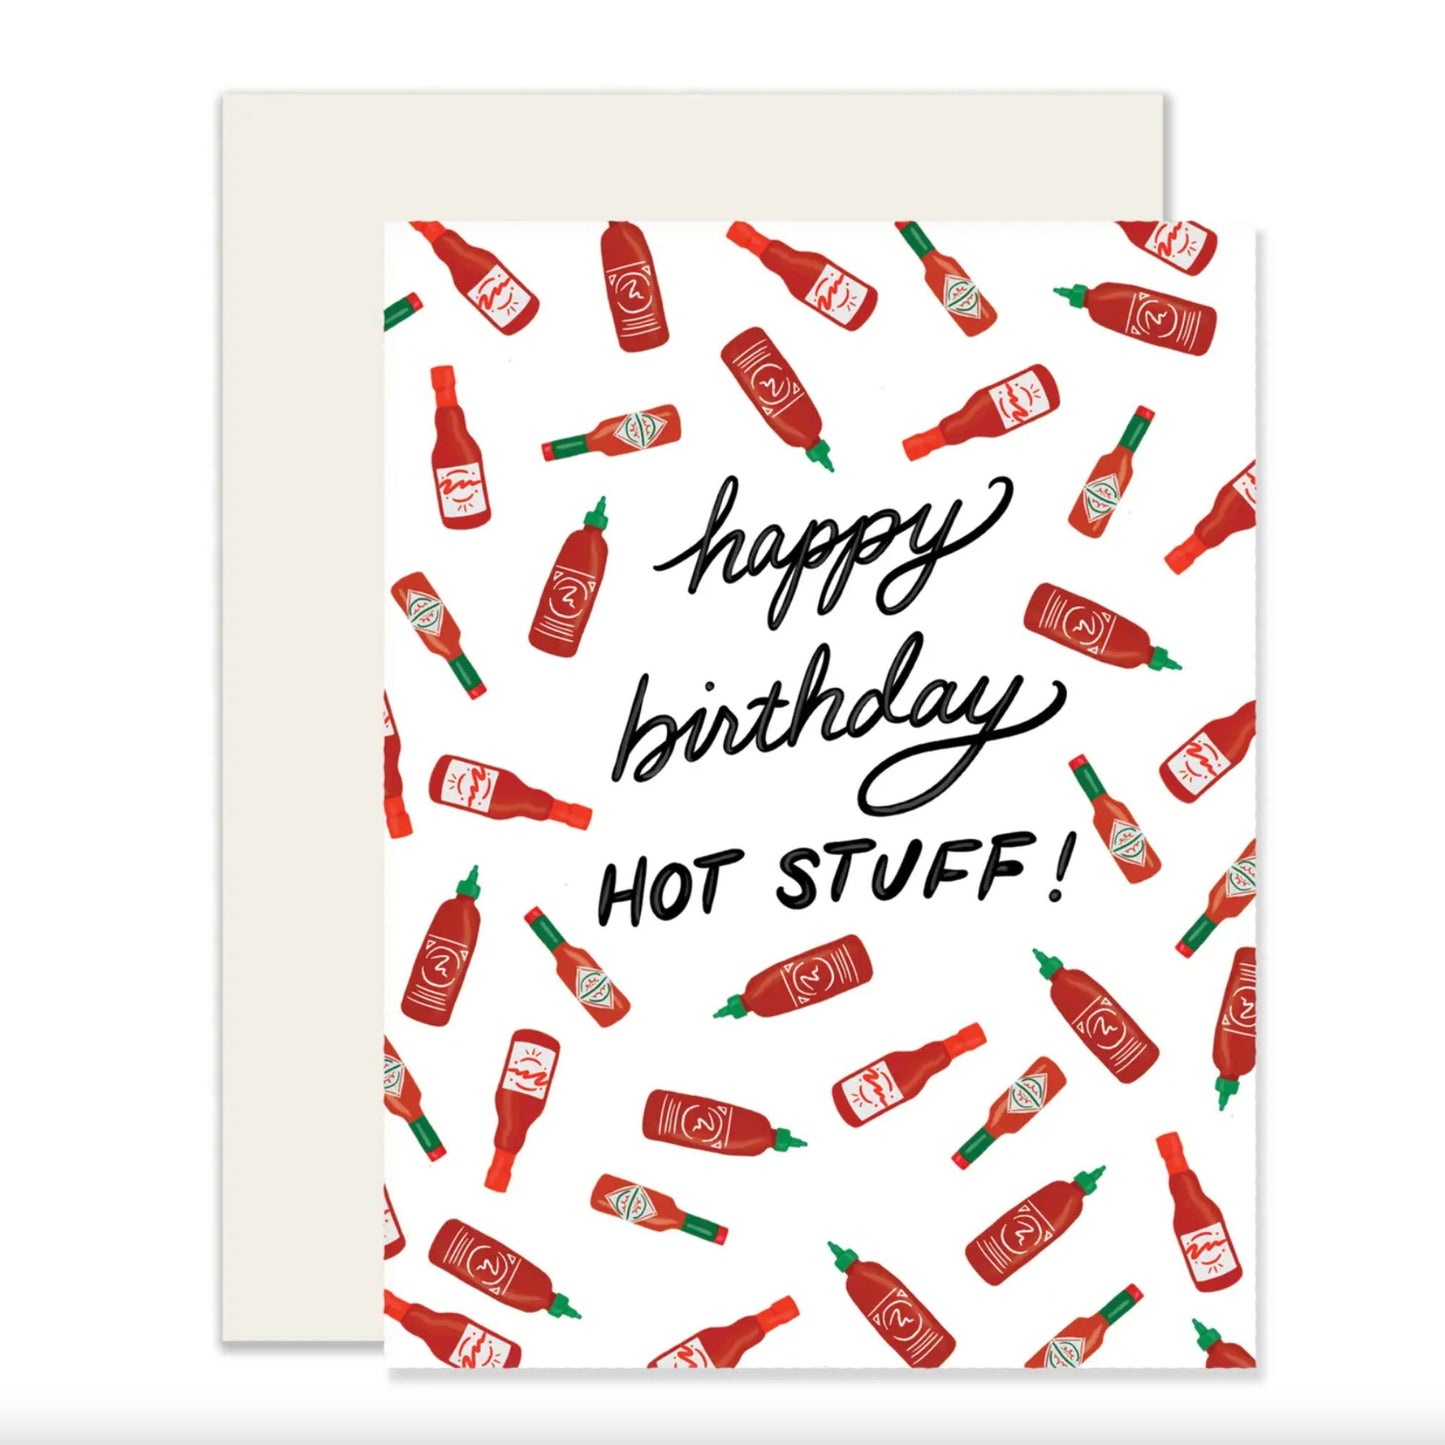 Hot Stuff Birthday Card